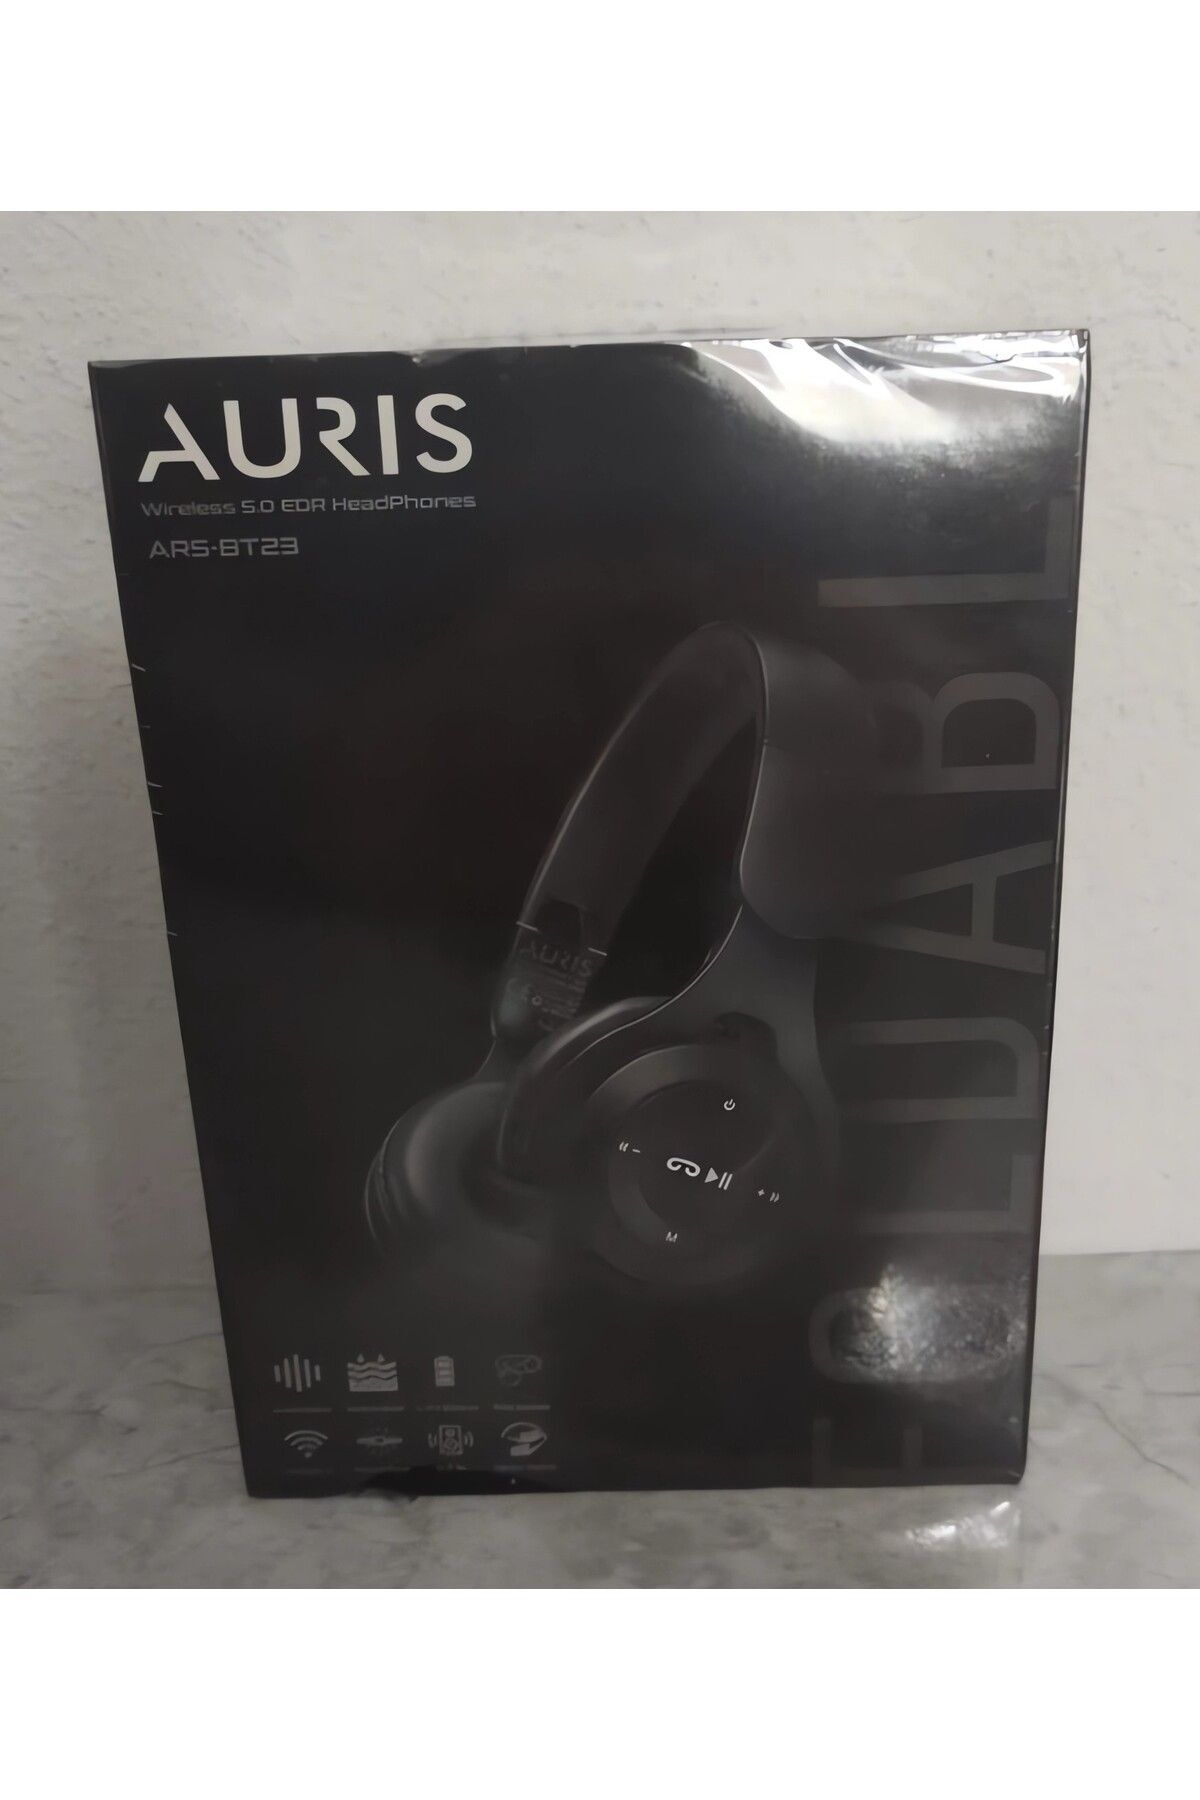 Auris ARS-BT23 Katlanabilir Kafa Üstü Kablosuz Bluetooth Kulaklık